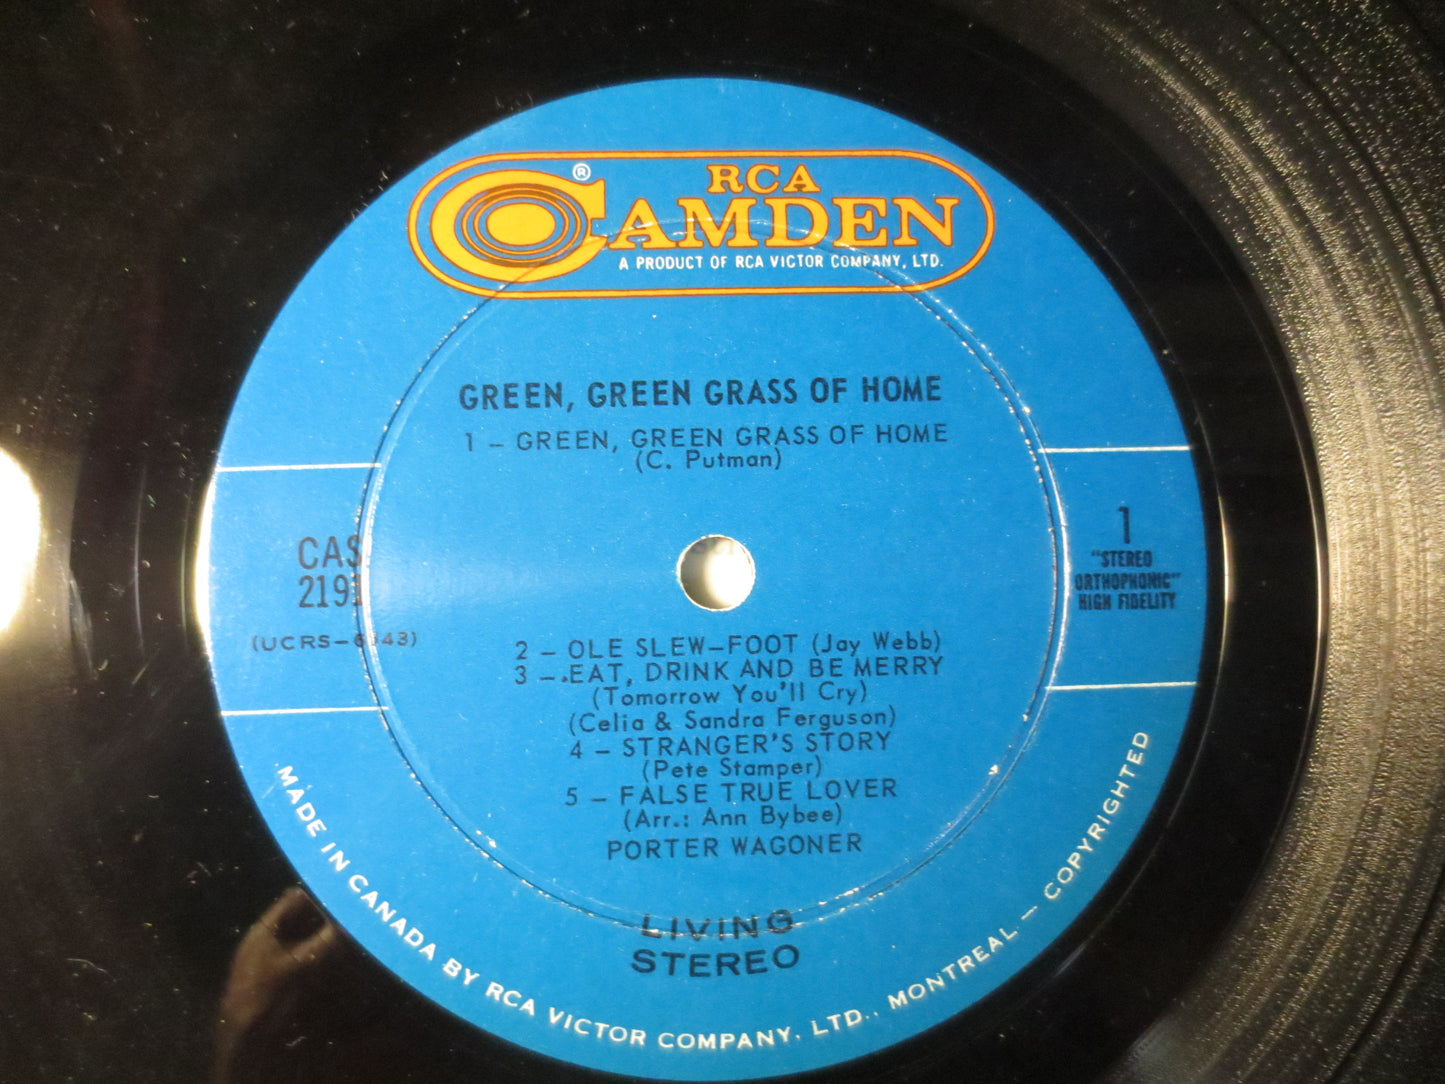 PORTER WAGONER Album, Green Grass of Home, Porter Wagoner Vinyl, Porter Wagoner Lp, Vintage Vinyl, Vinyl Lp, 1967 Records